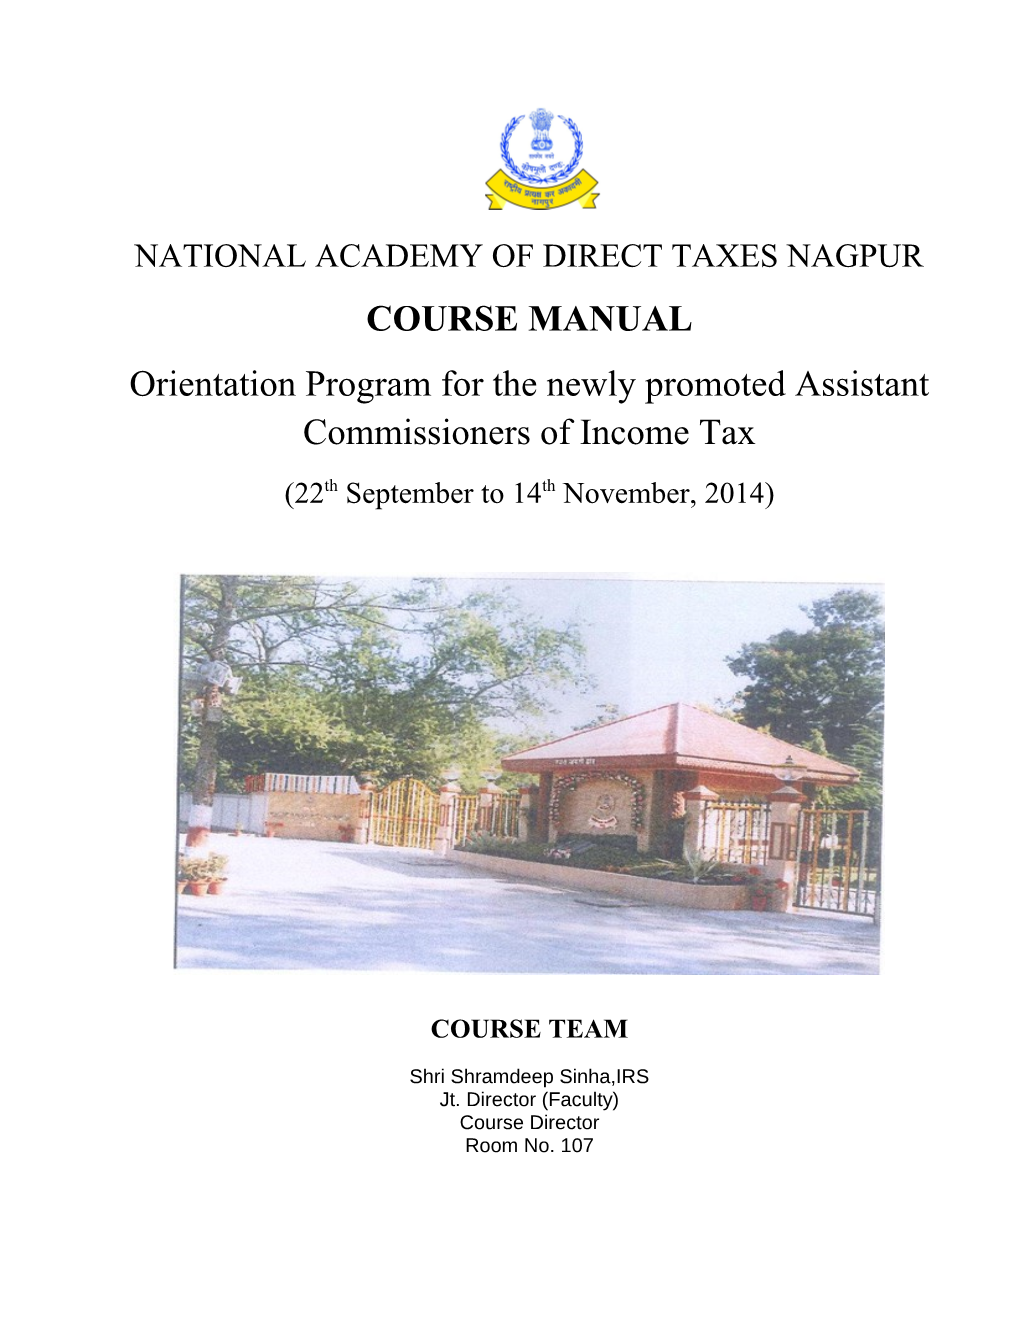 National Academy of Direct Taxes Nagpur